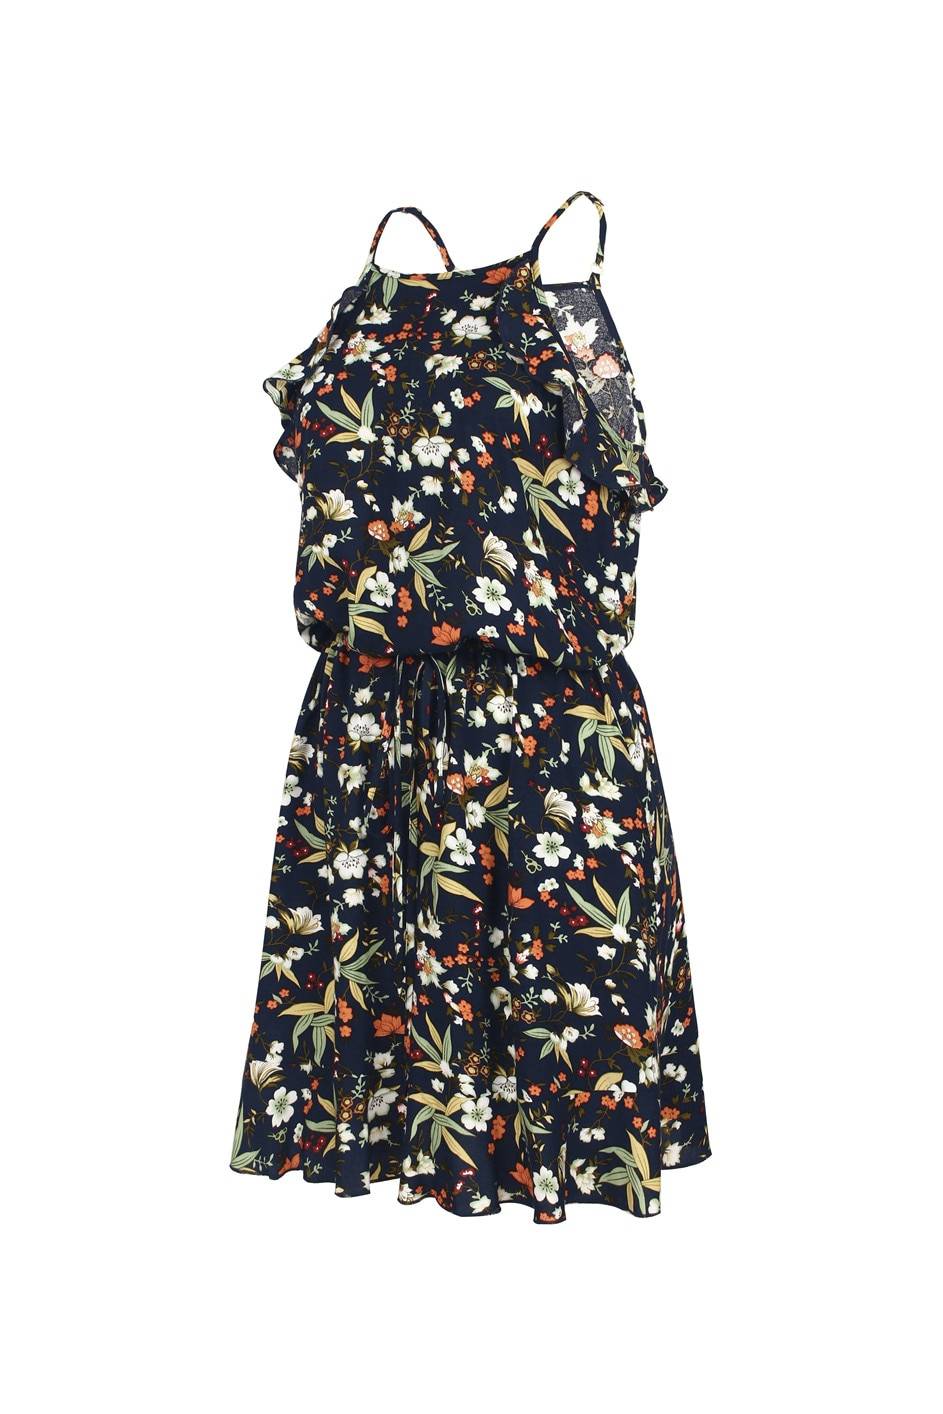 Halter Print Sleeveless Ruffles Above Knee Mini Floral Dress in Dresses